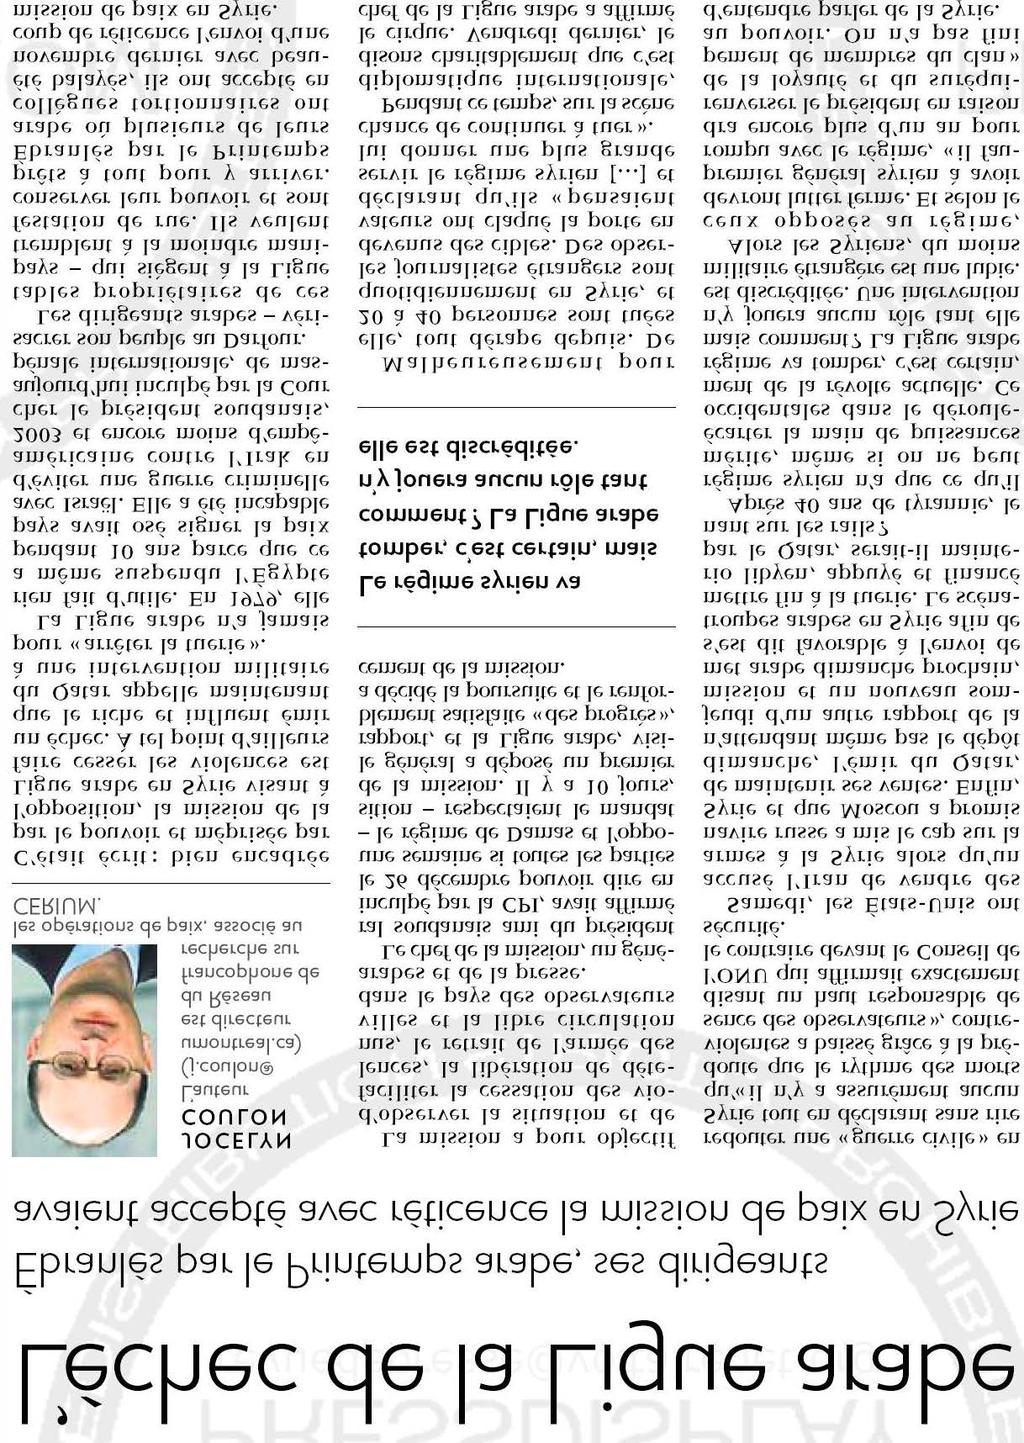 La Presse (Canada) Mardi 17 janvier 2012,